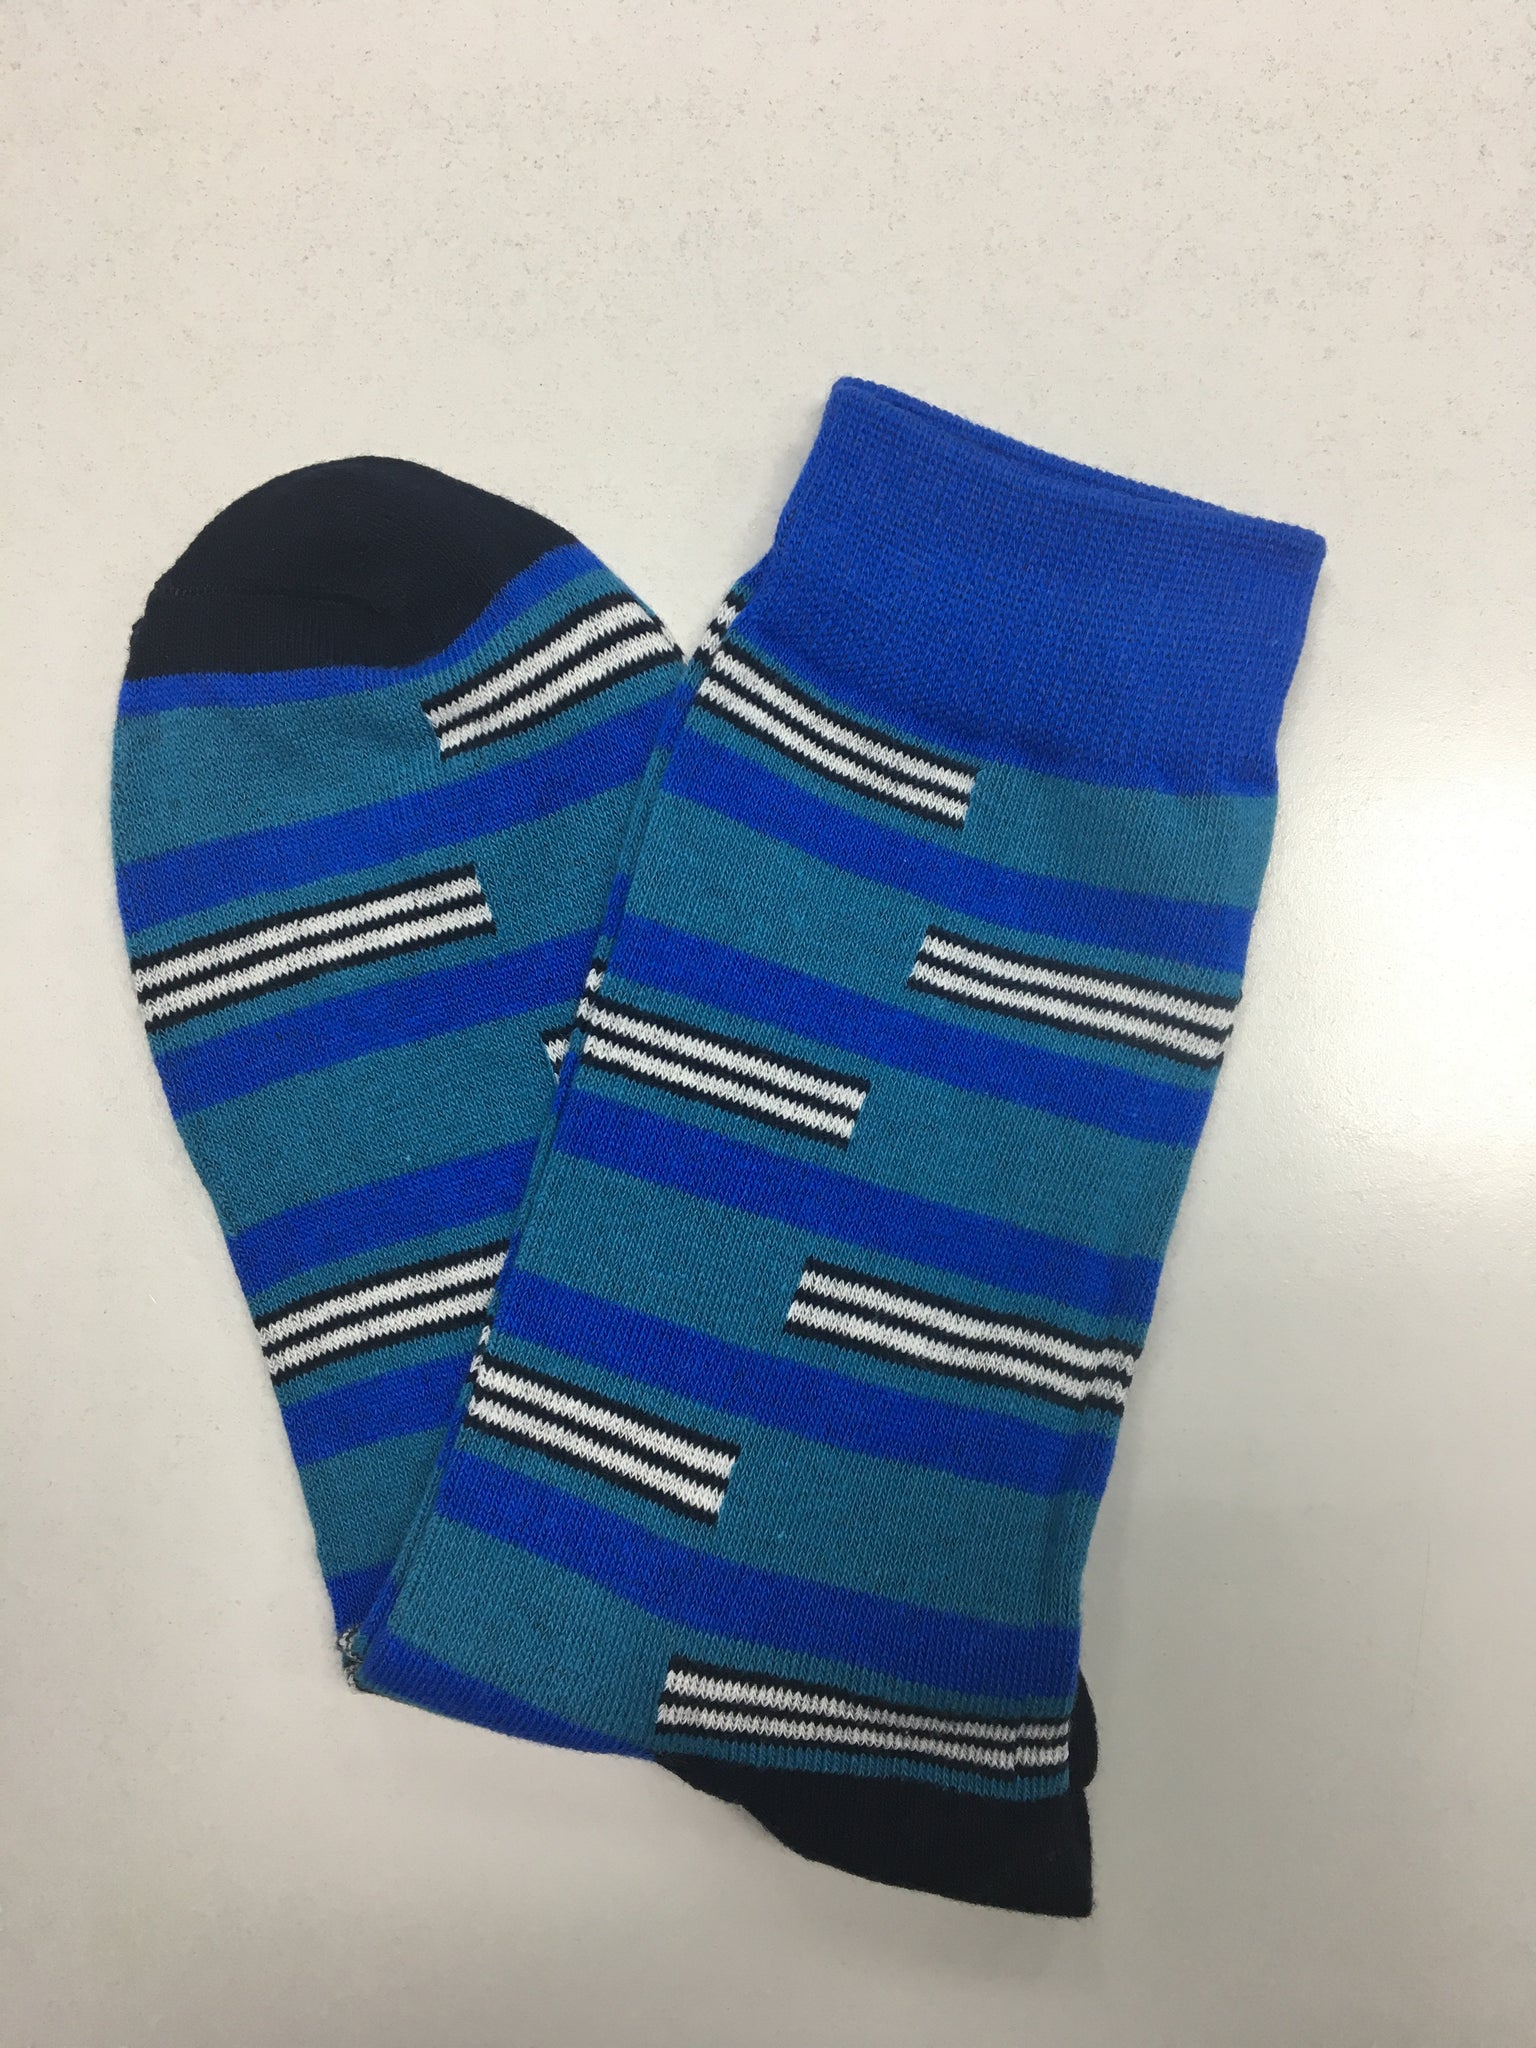 Fashion socks - Socksn'Ties